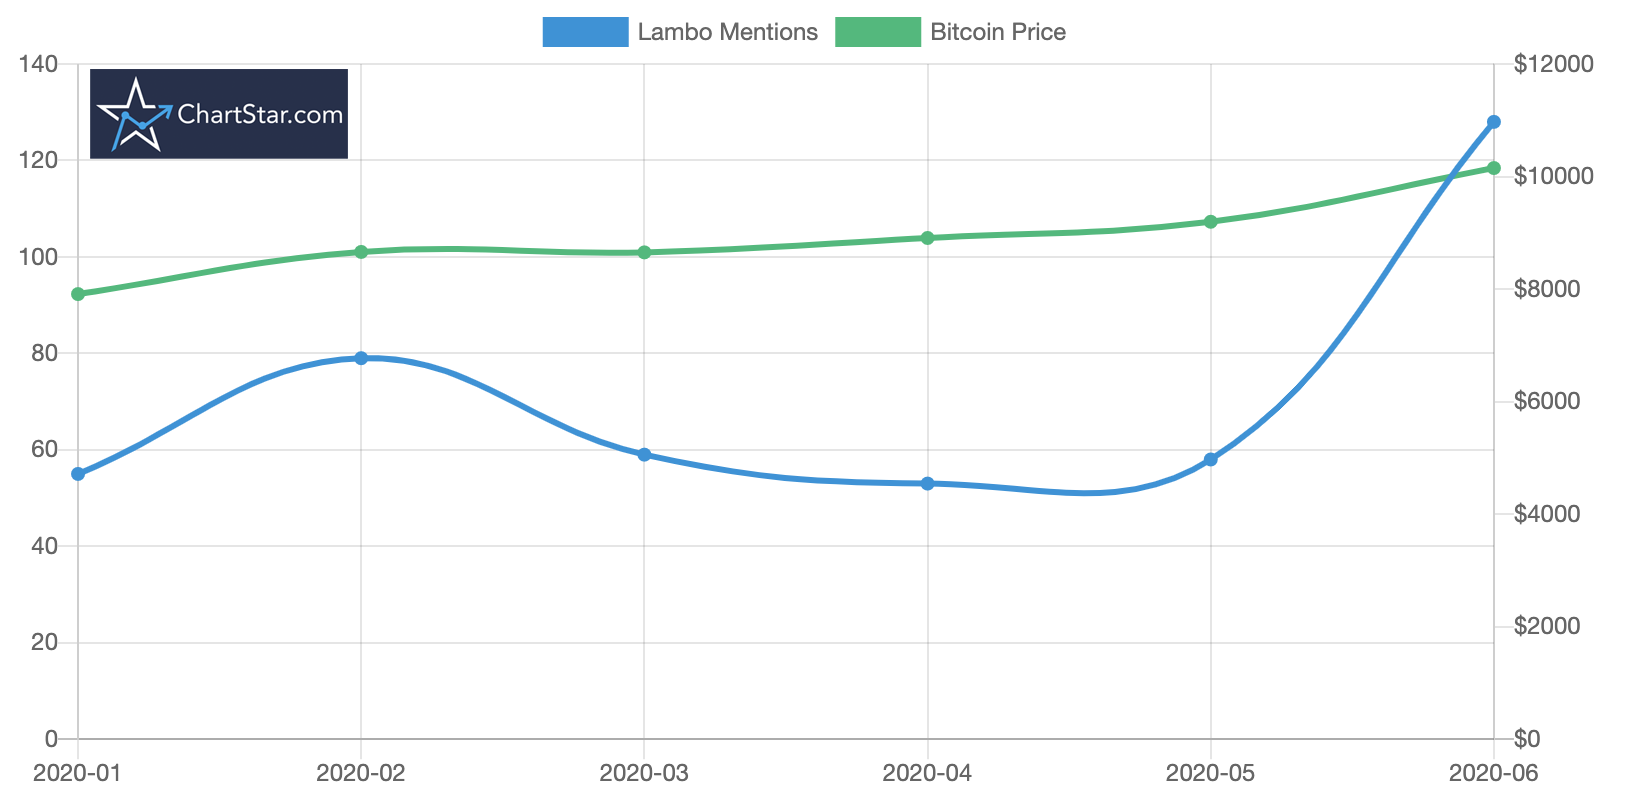 Bitcoin price vs lambo mentions